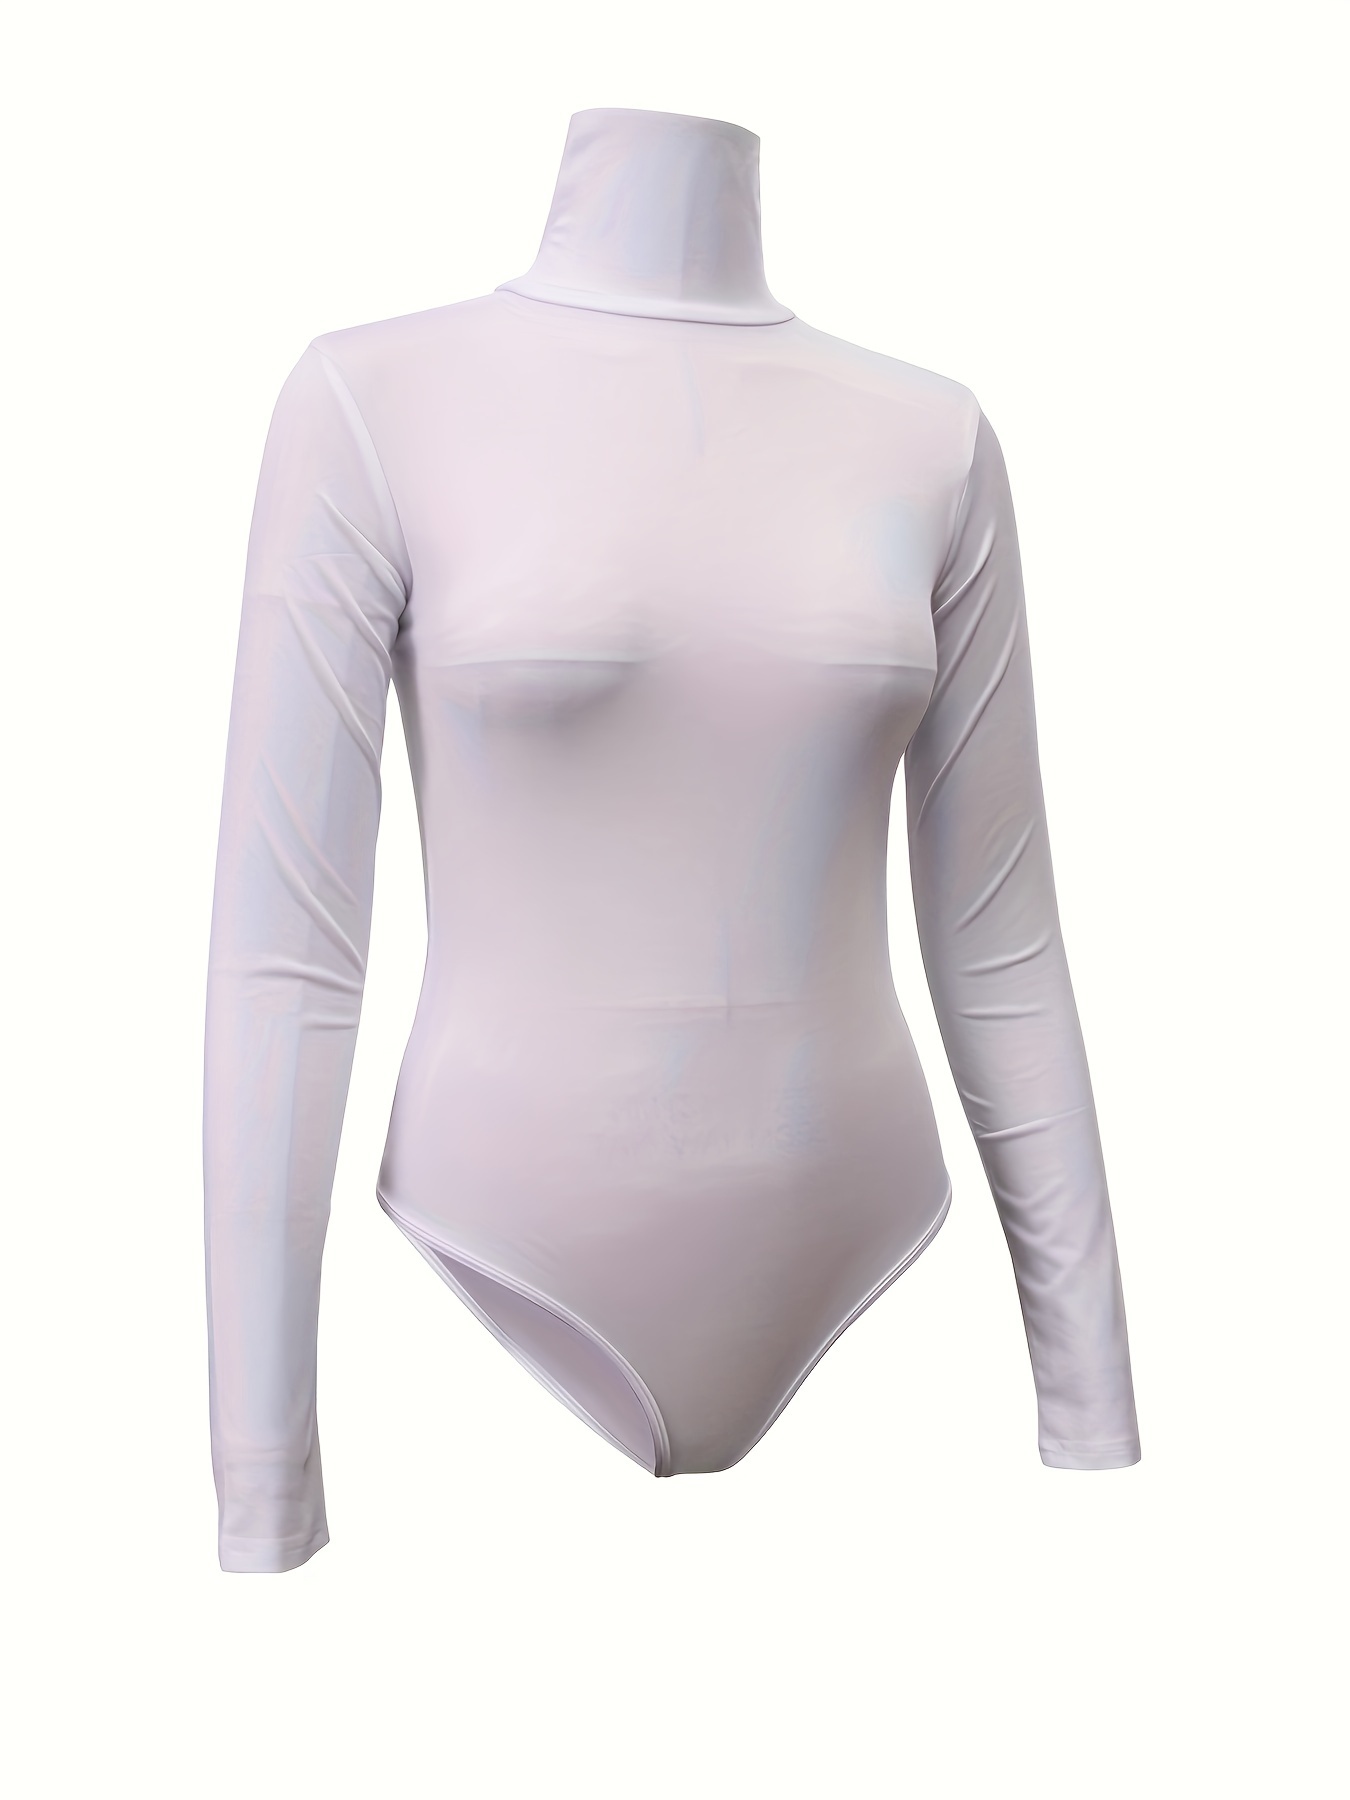 TQD Turtleneck Bodysuit for Women Mock Neck Long Sleeve Bodysuit